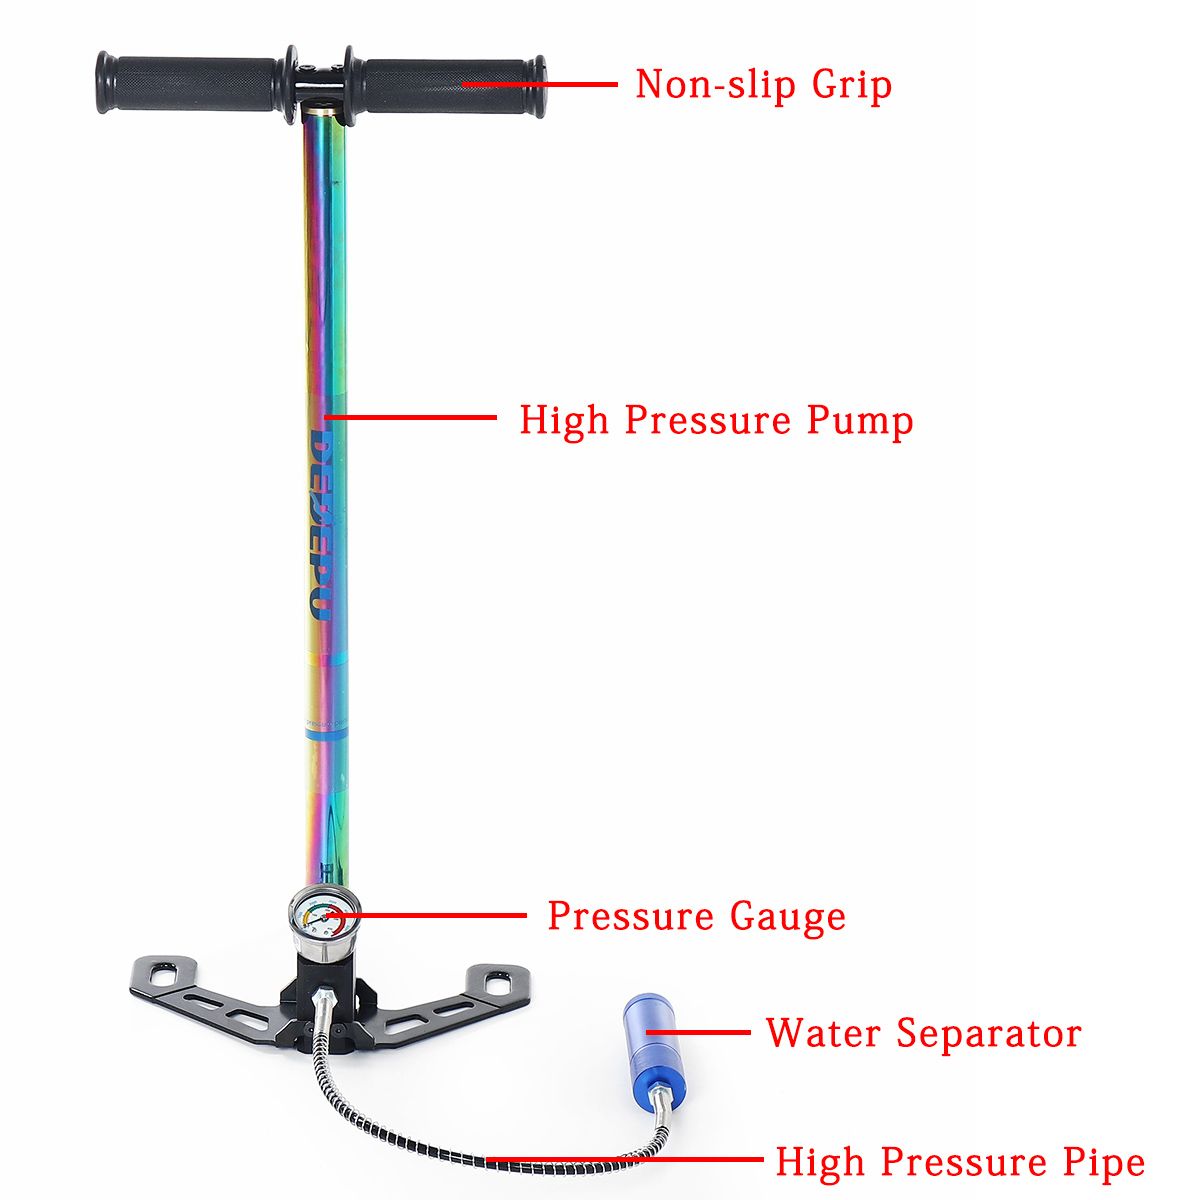 30MPa-Diving-Oxygen-Cylinder-Operated-Hand-Pump-Scuba-Diving-Manual-Air-Pump-1692738